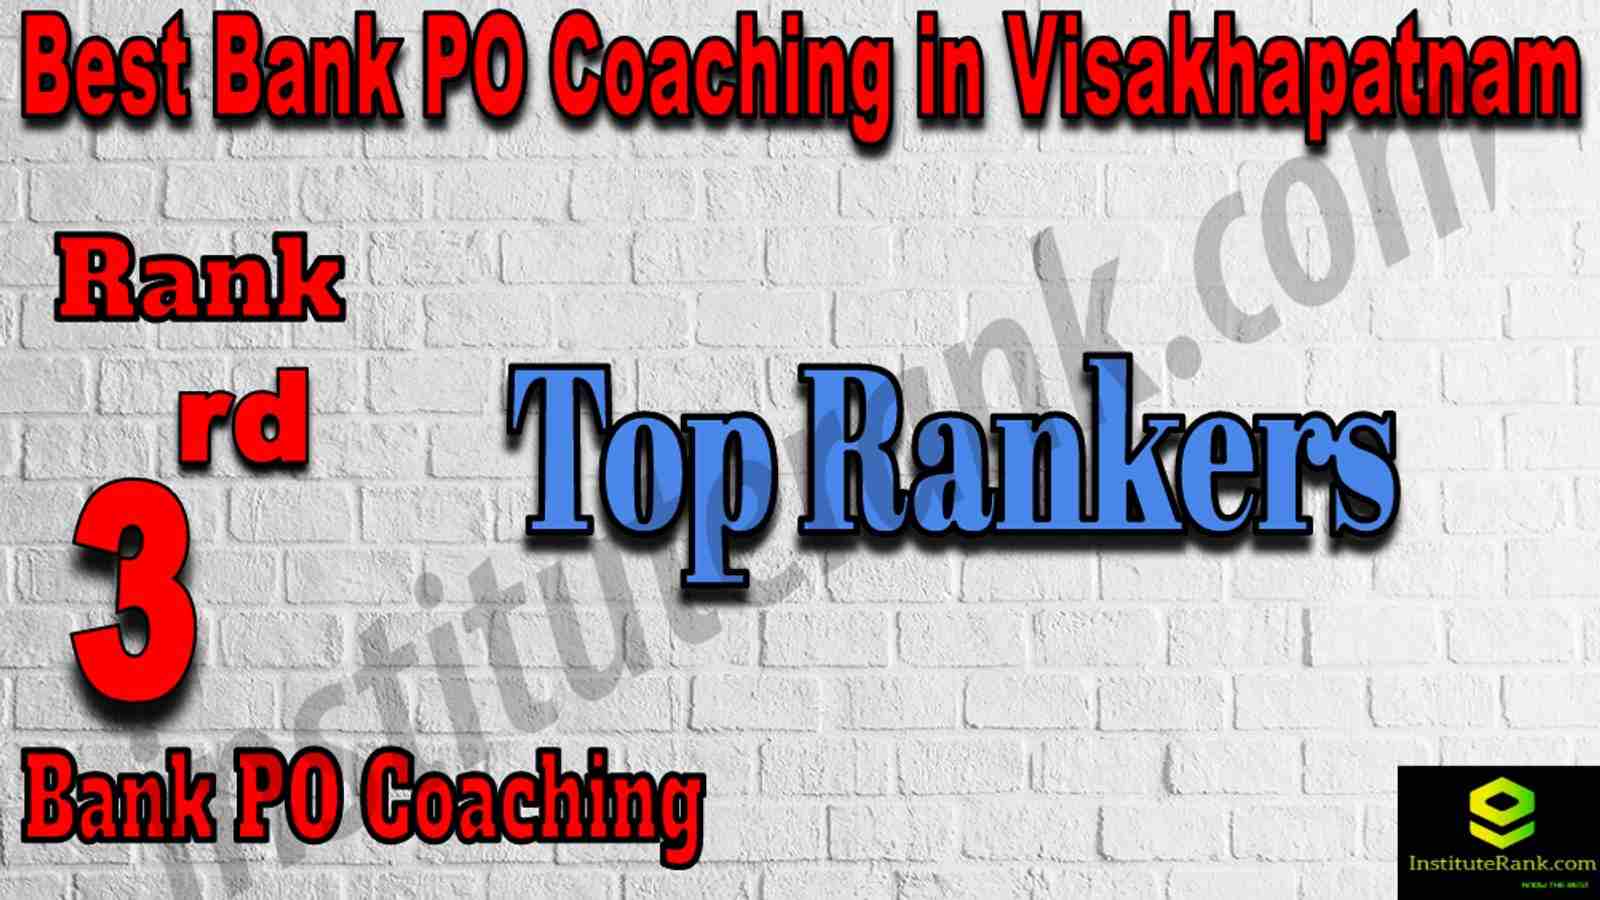 3rd Best Bank PO Coaching in Visakhapatnam